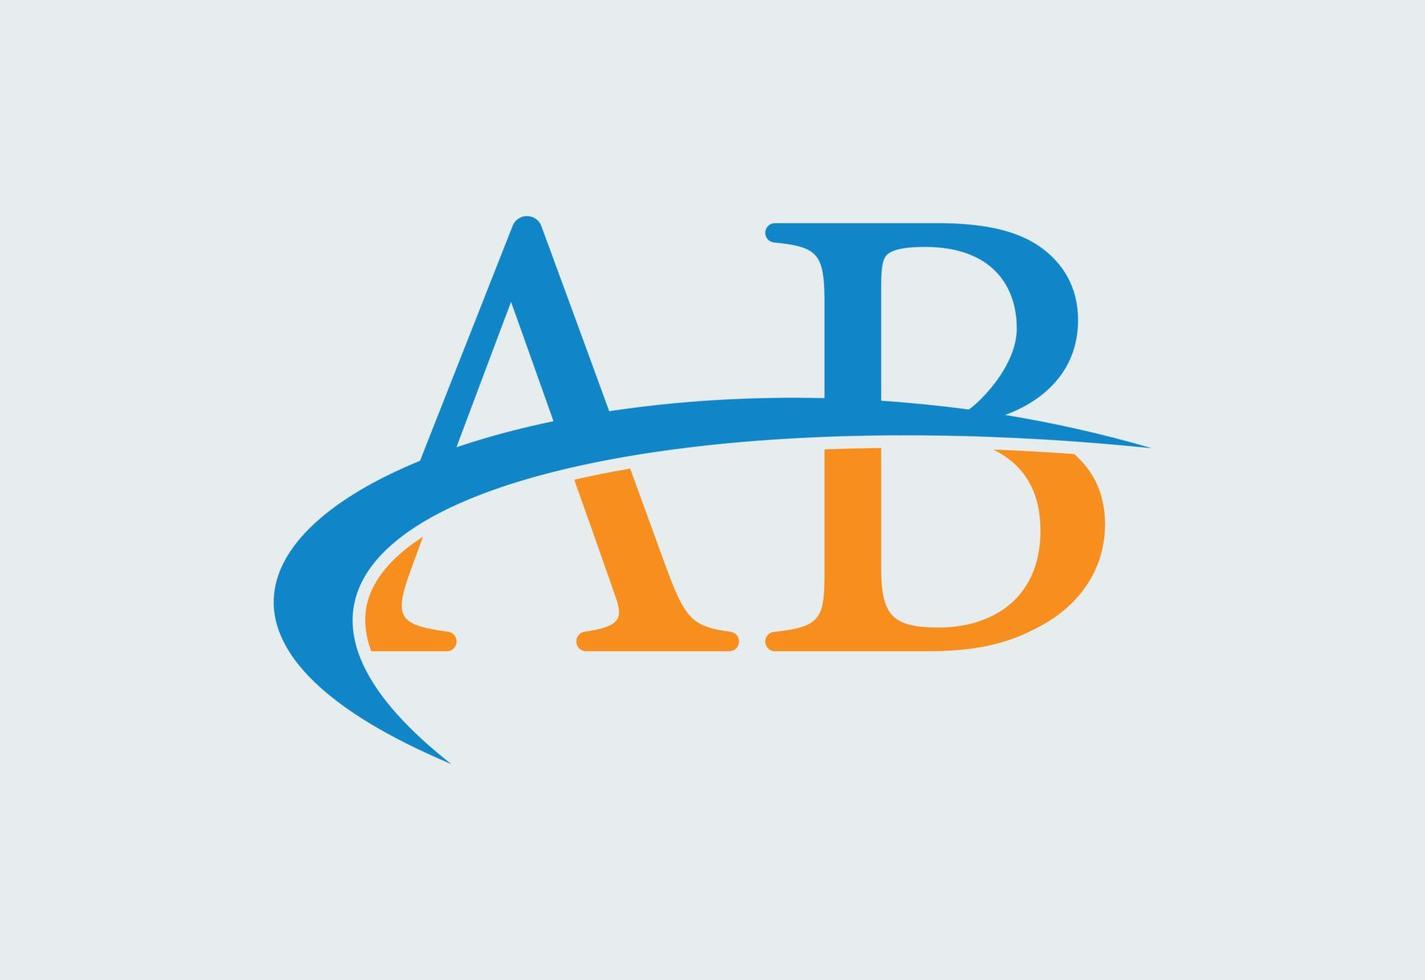 design inicial do logotipo da letra ab, conceito de design vetorial vetor